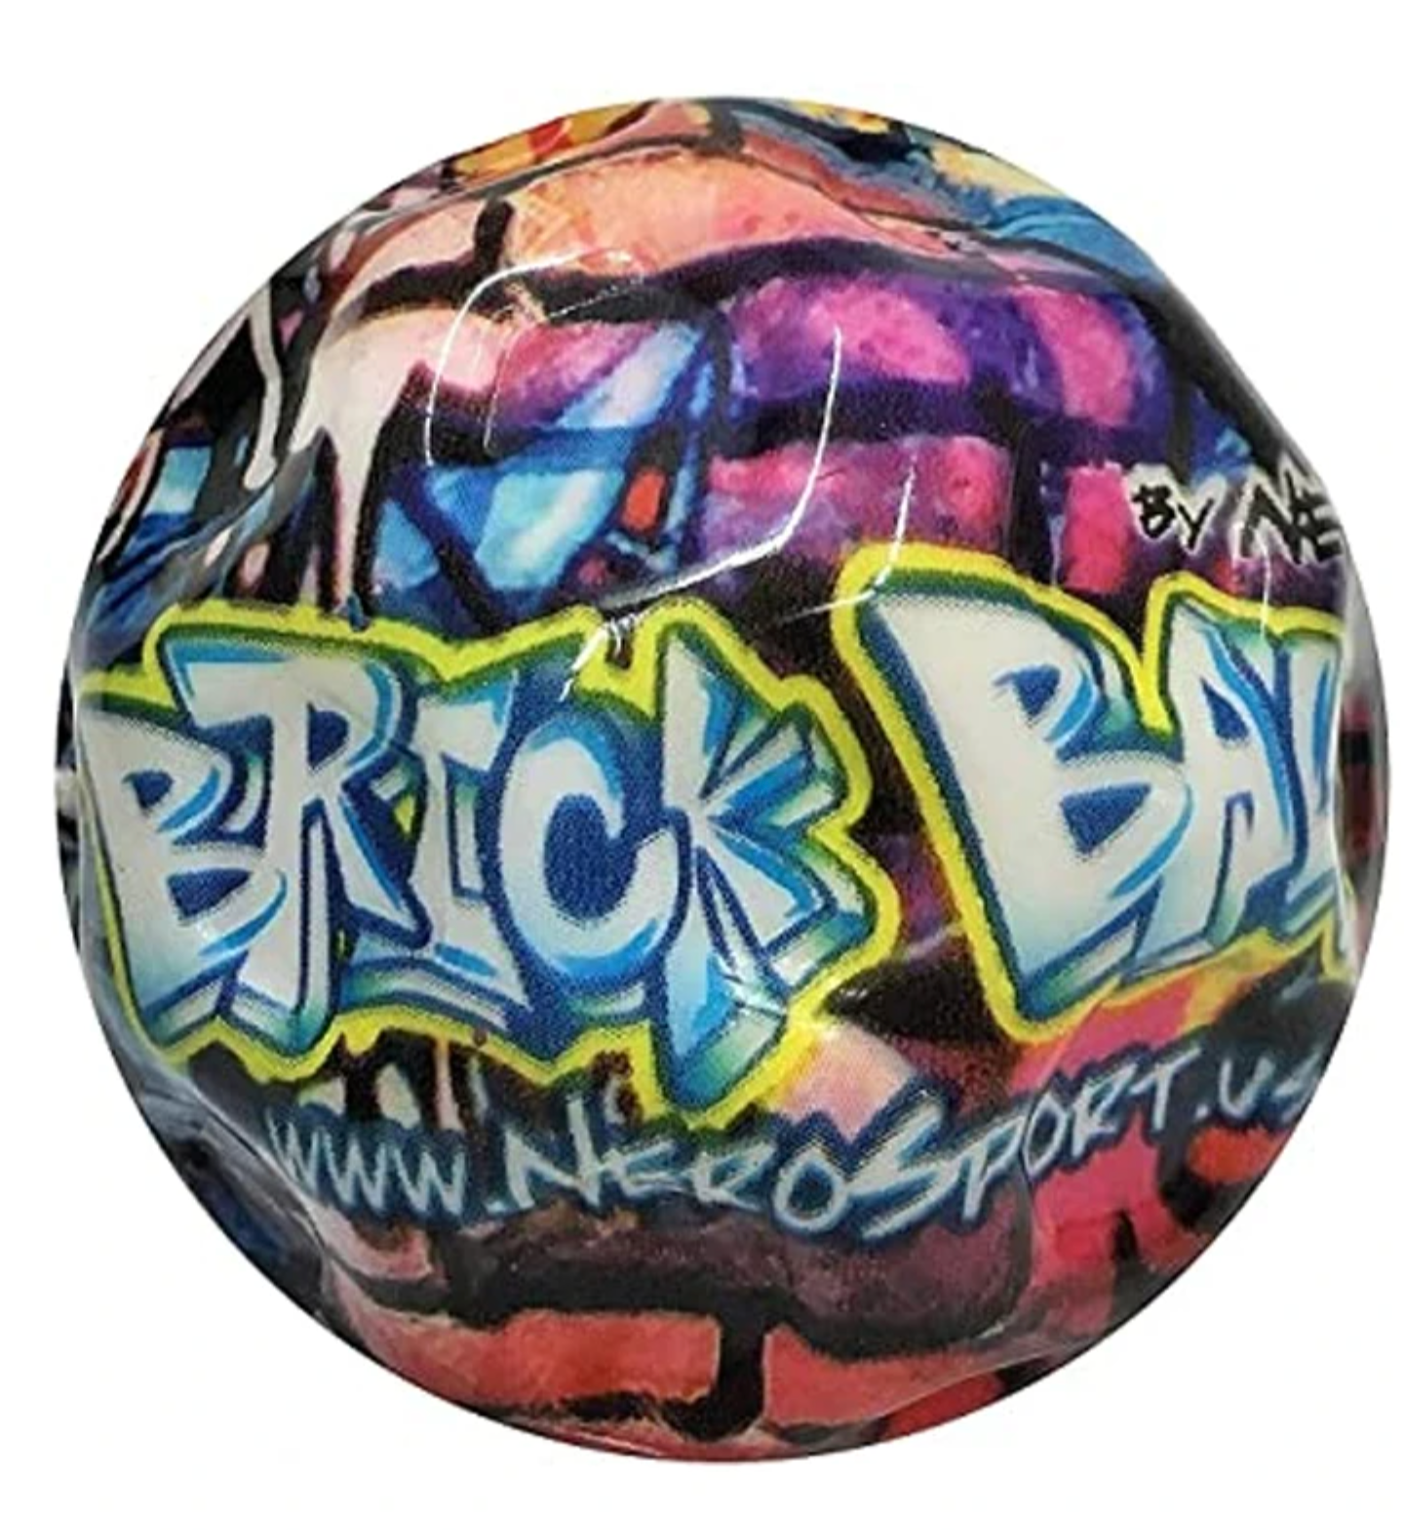 Nero Sport Brick Ball Crazyness